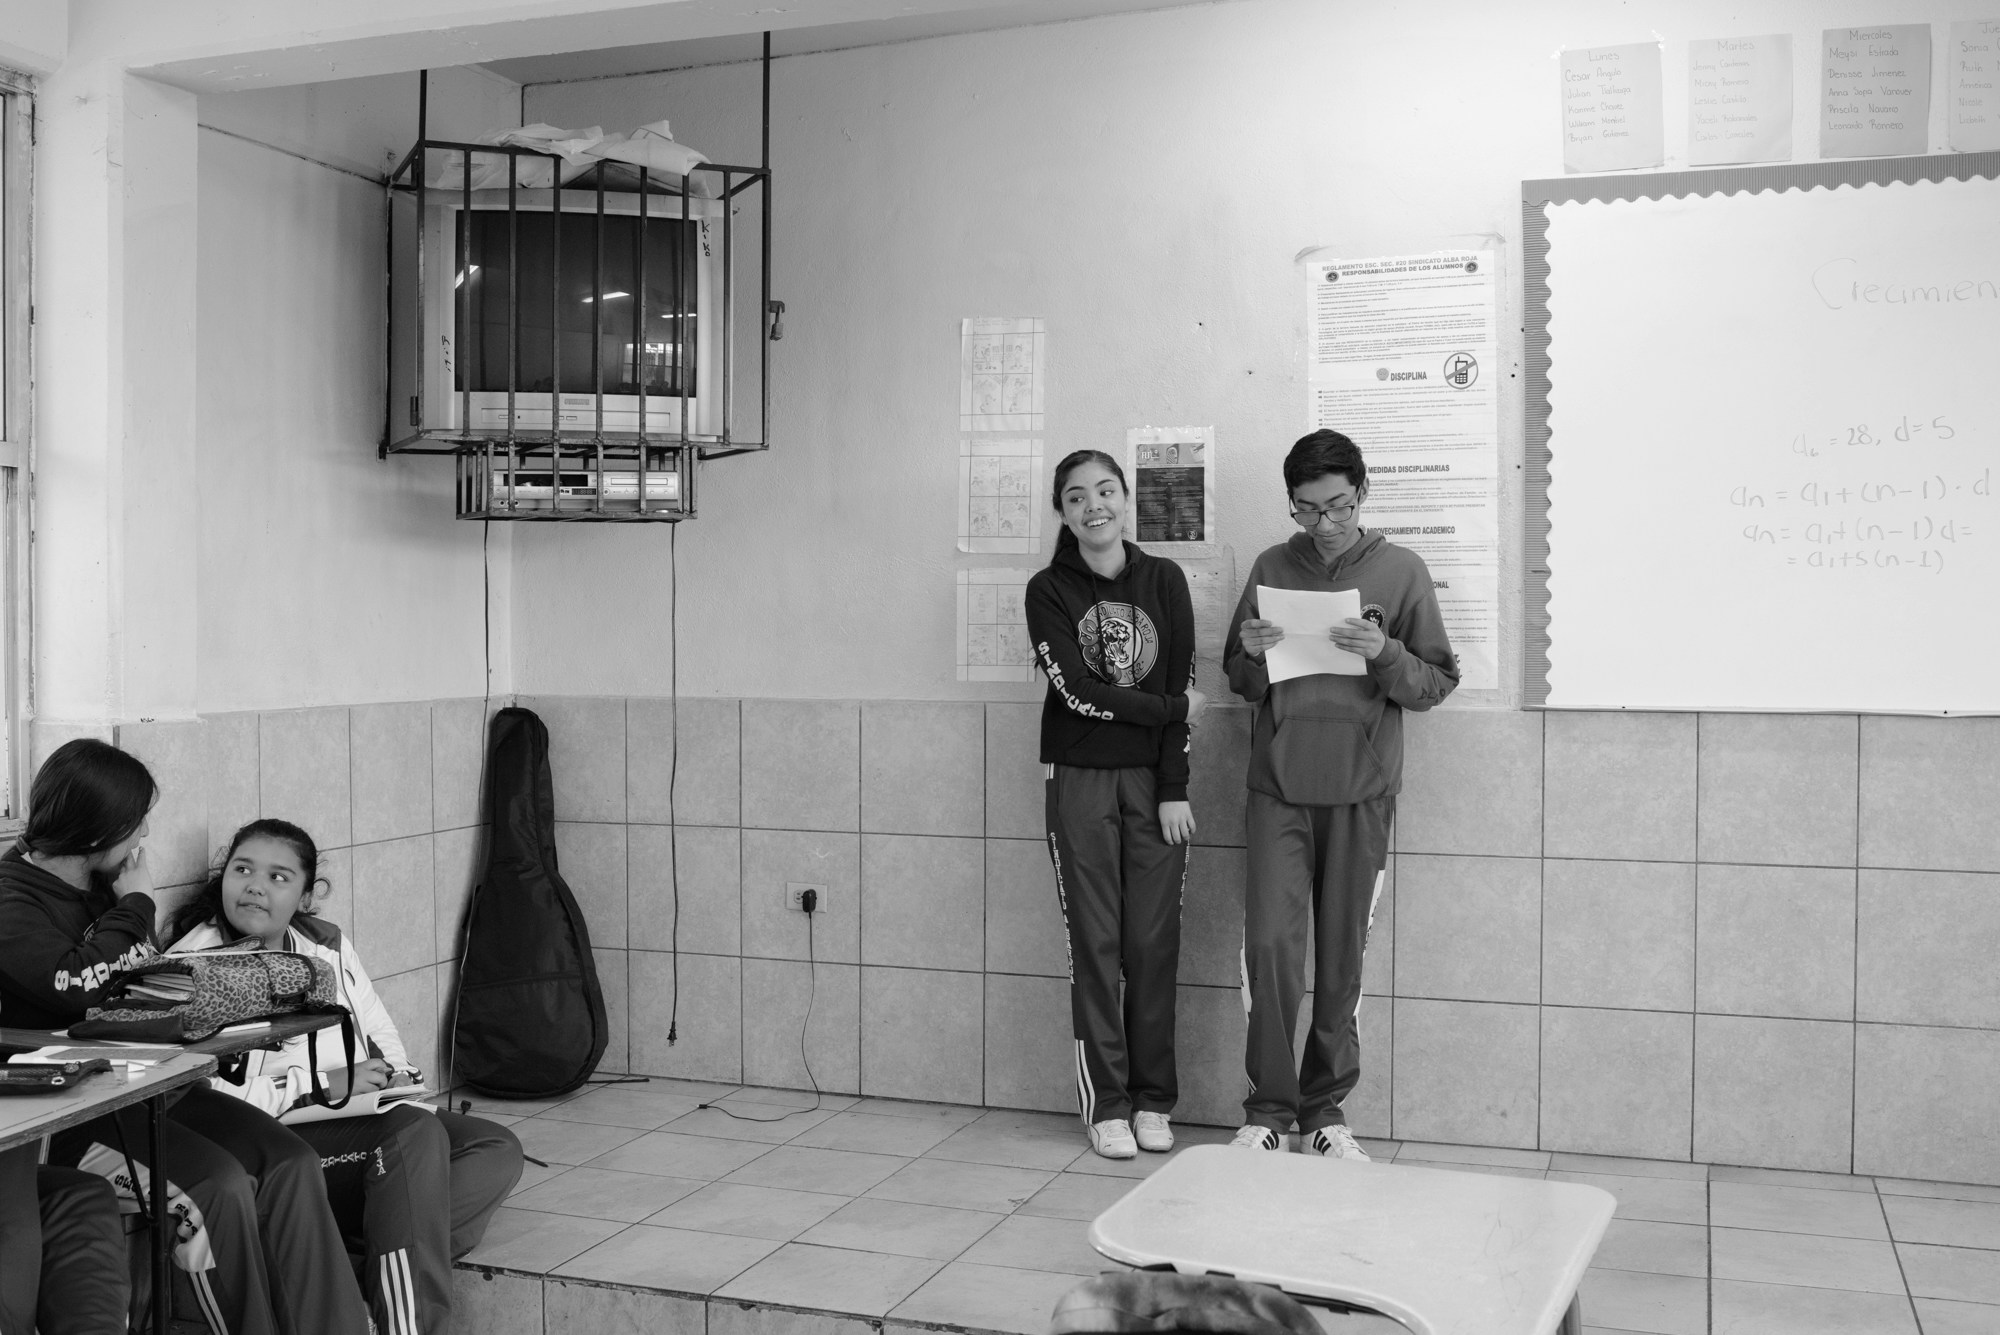 Students work on a math problem at Escuela Secundaria Sindicato Alba Roja.